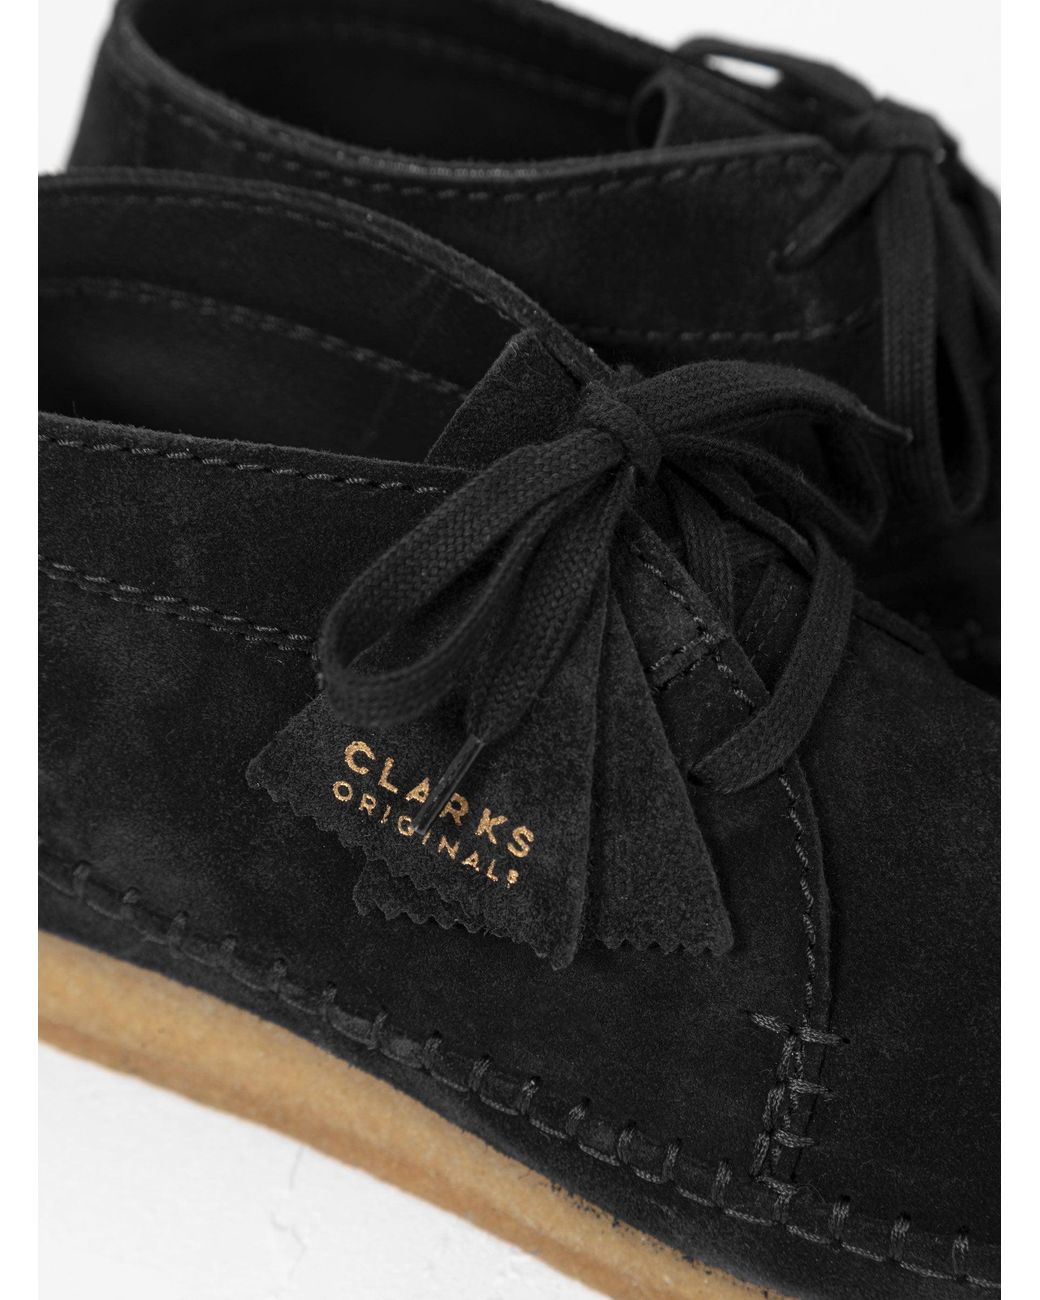 Clarks Weaver Boots Black Suede for Men | Lyst